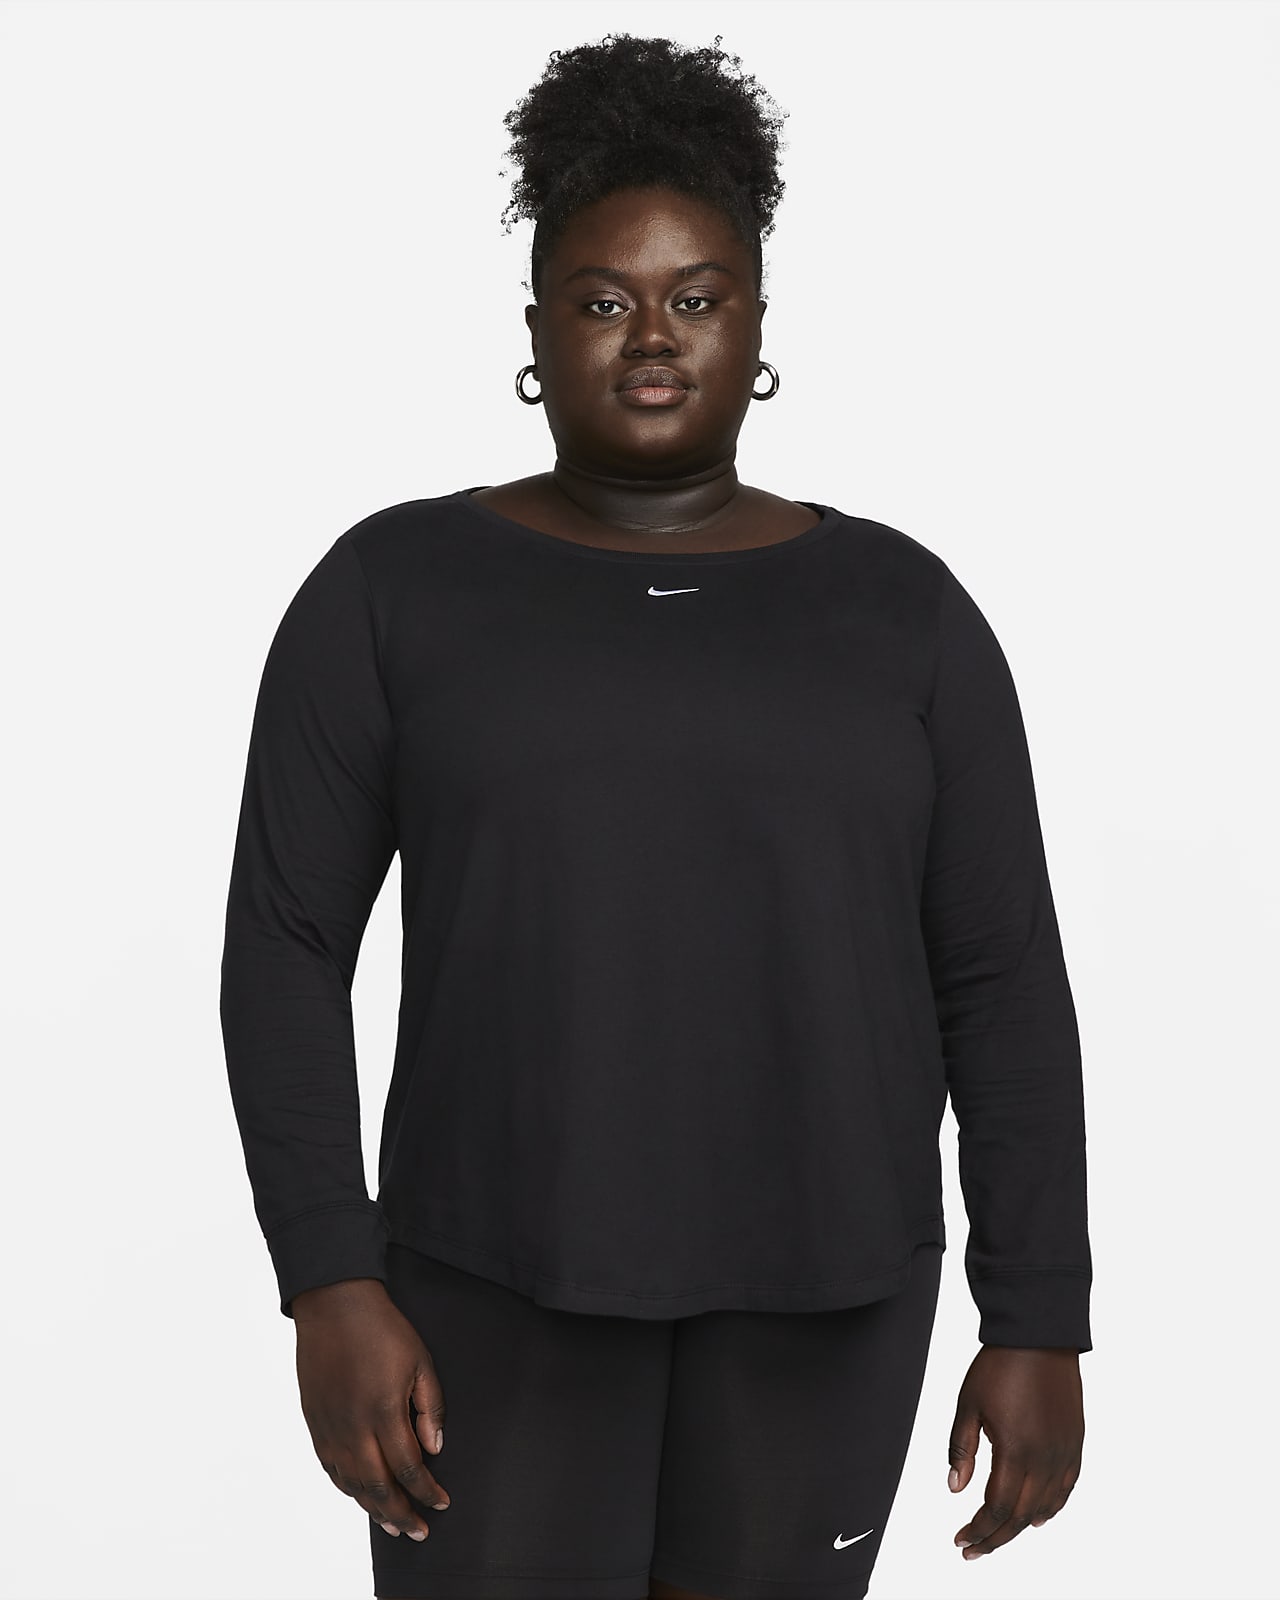 Tee-shirt à manches longues Nike Sportswear pour femme (grande taille)